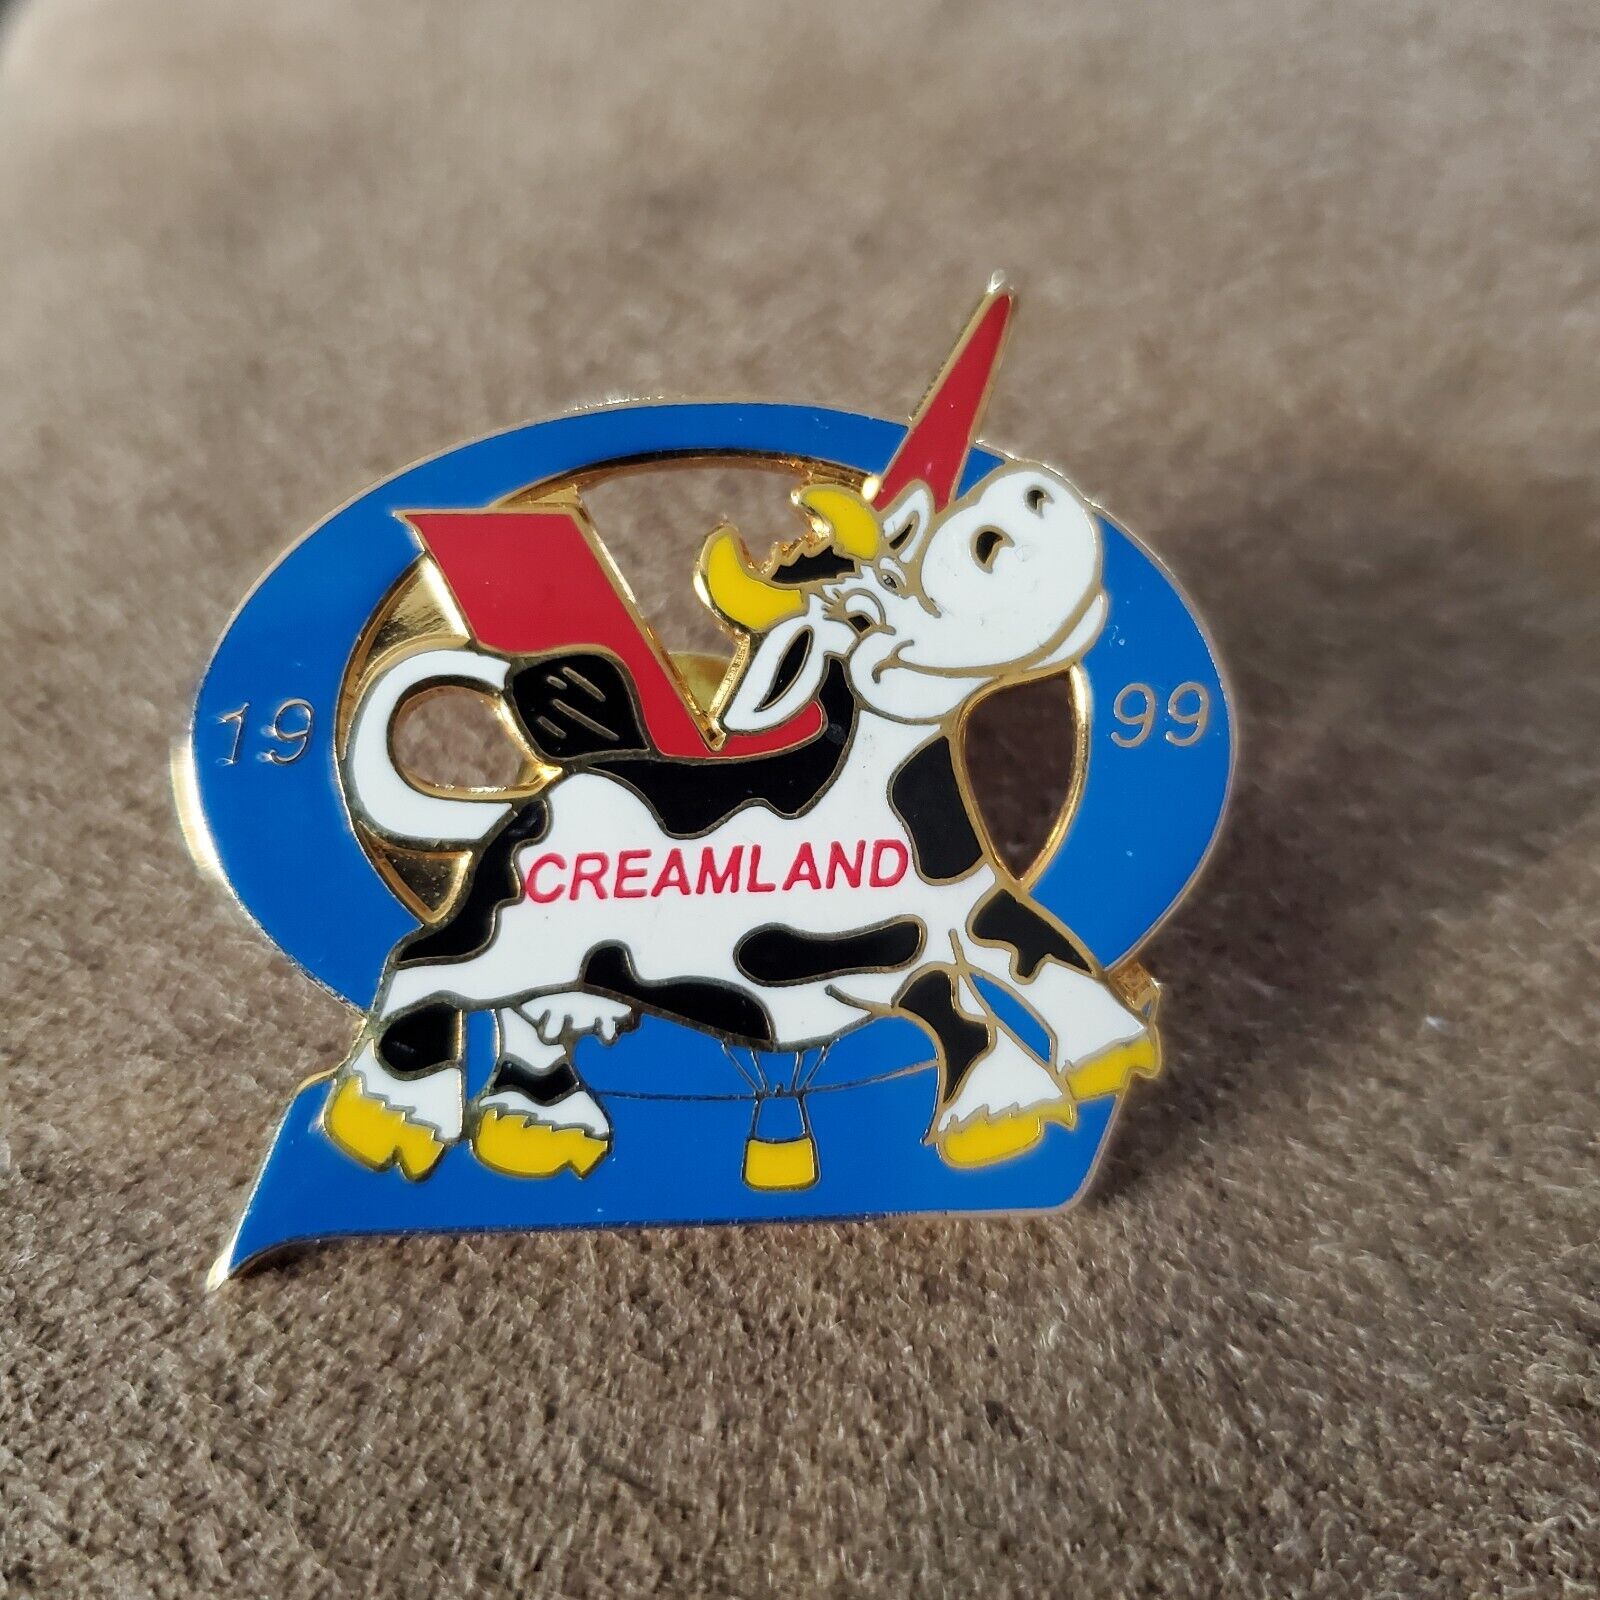 1999 Creamland Cow Pin 1 Of 2,500